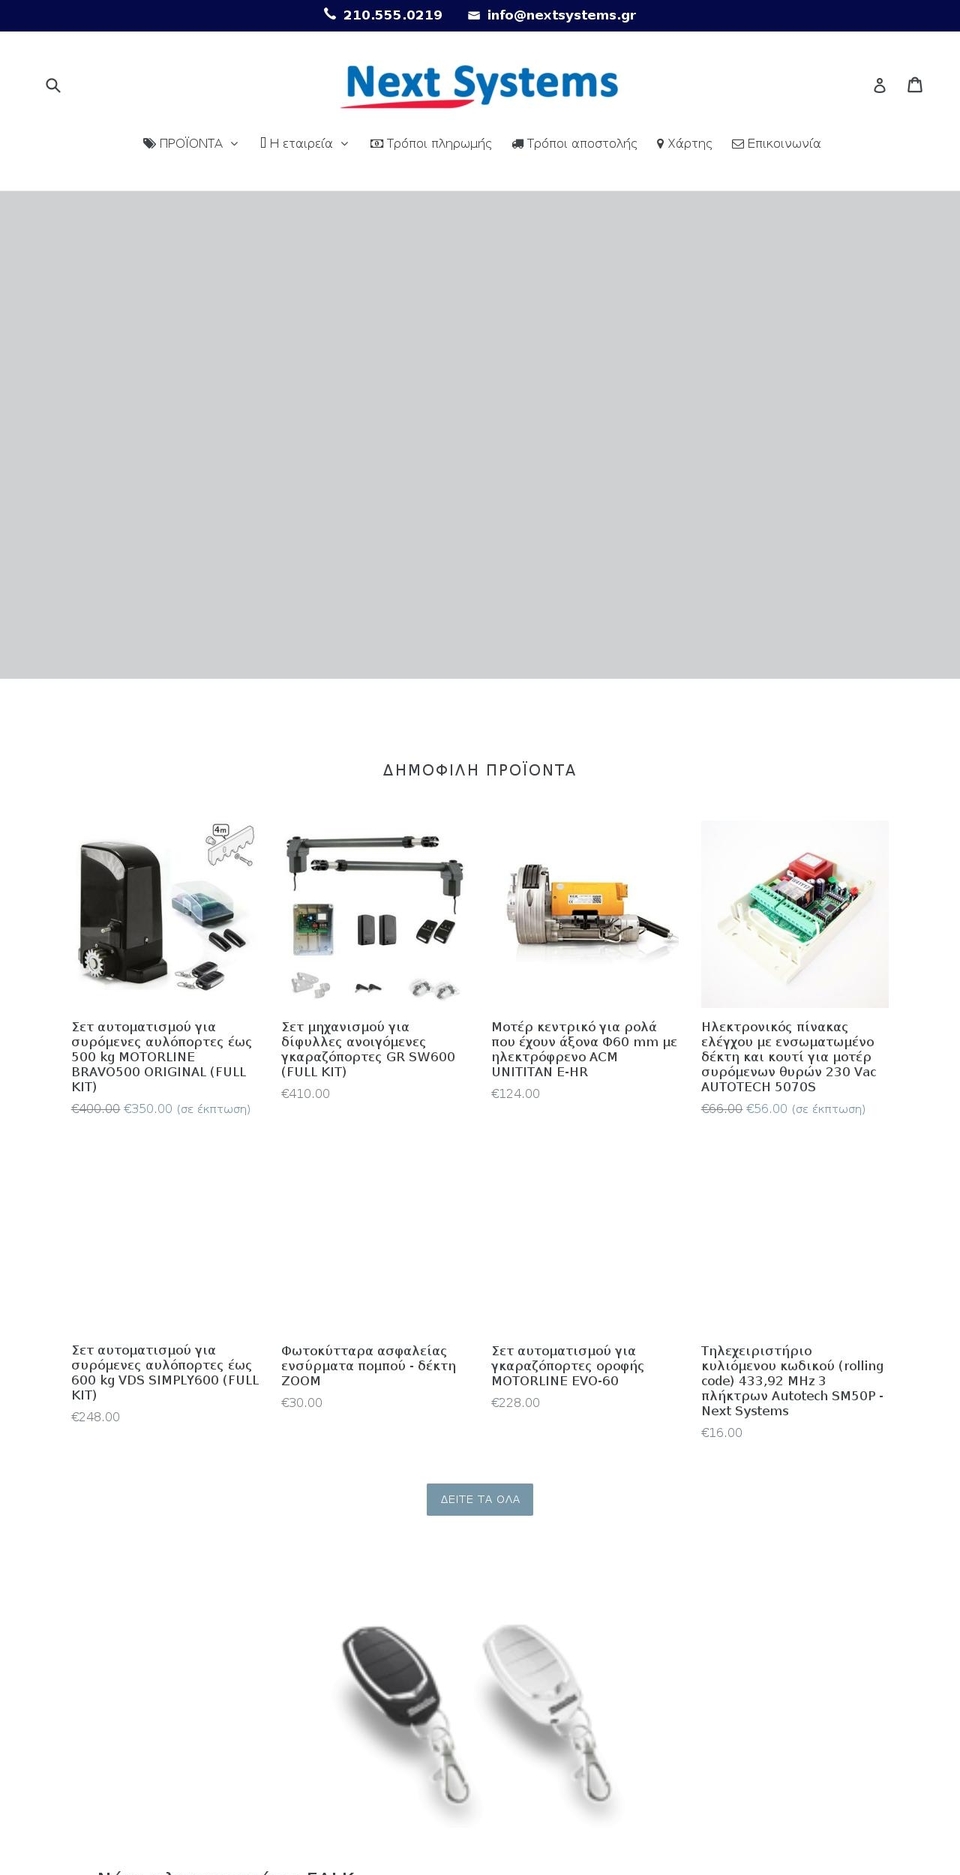 nextsystems.gr shopify website screenshot